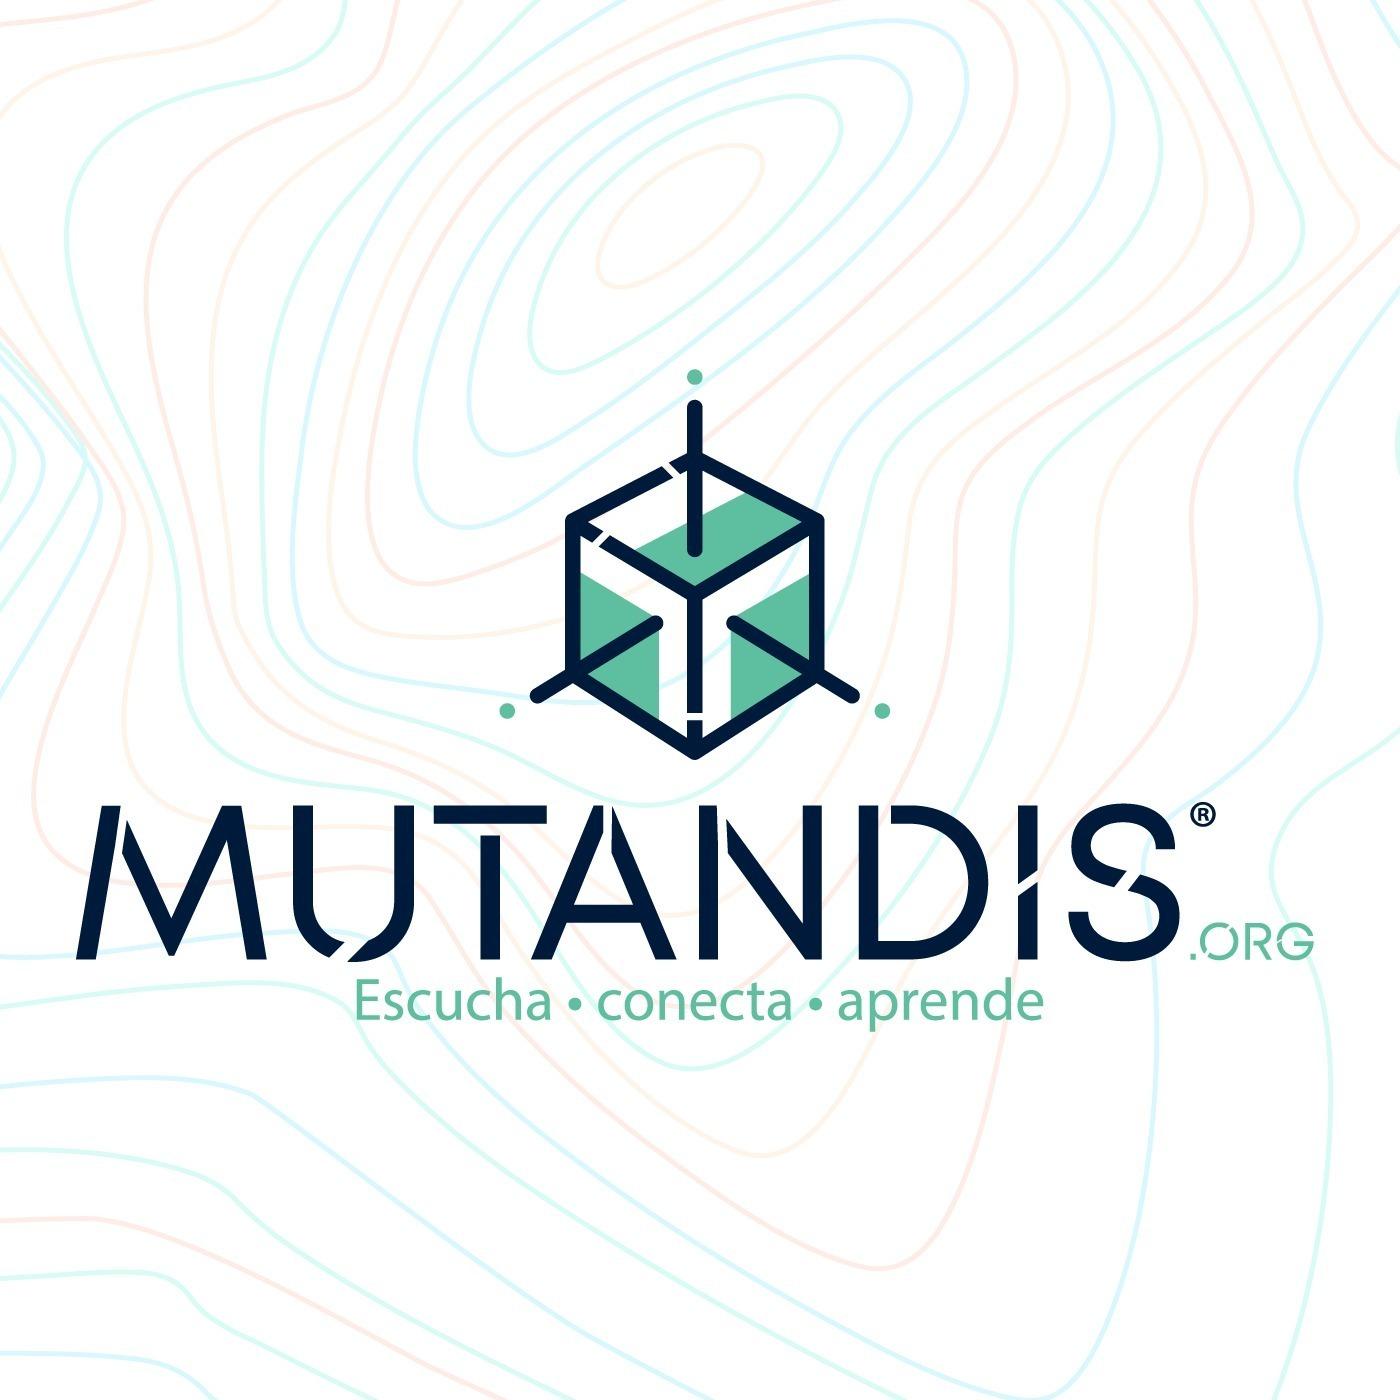 Mutandis.org | Escucha - Conecta - Aprende